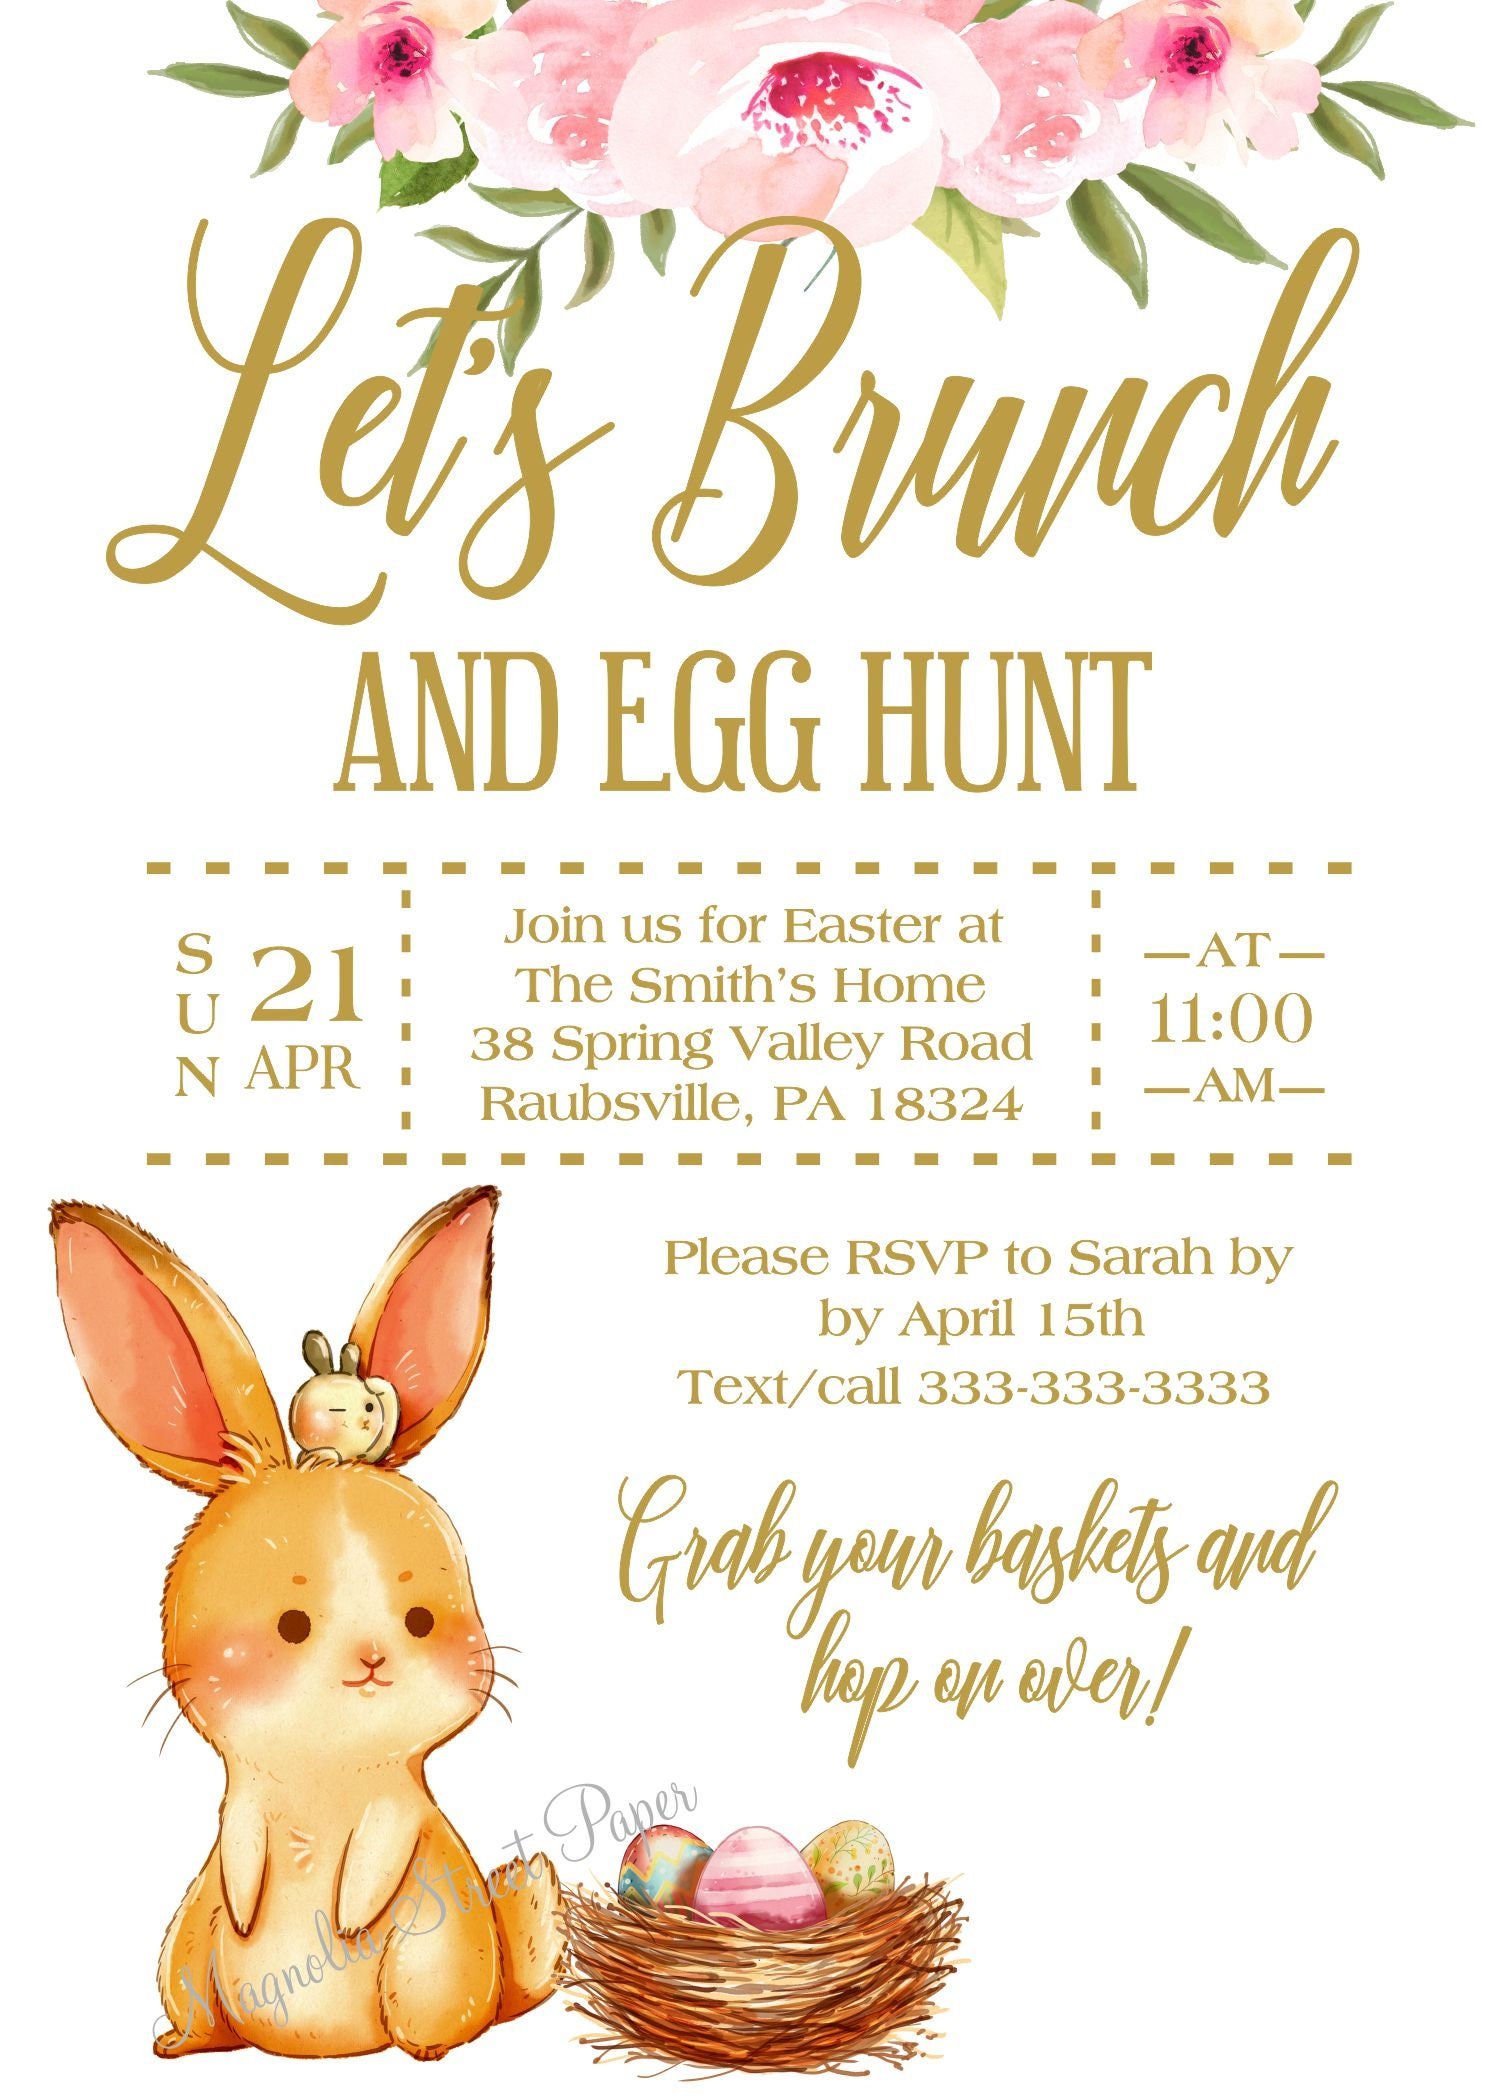 Easter Brunch and Egg Hunt Party Invitation